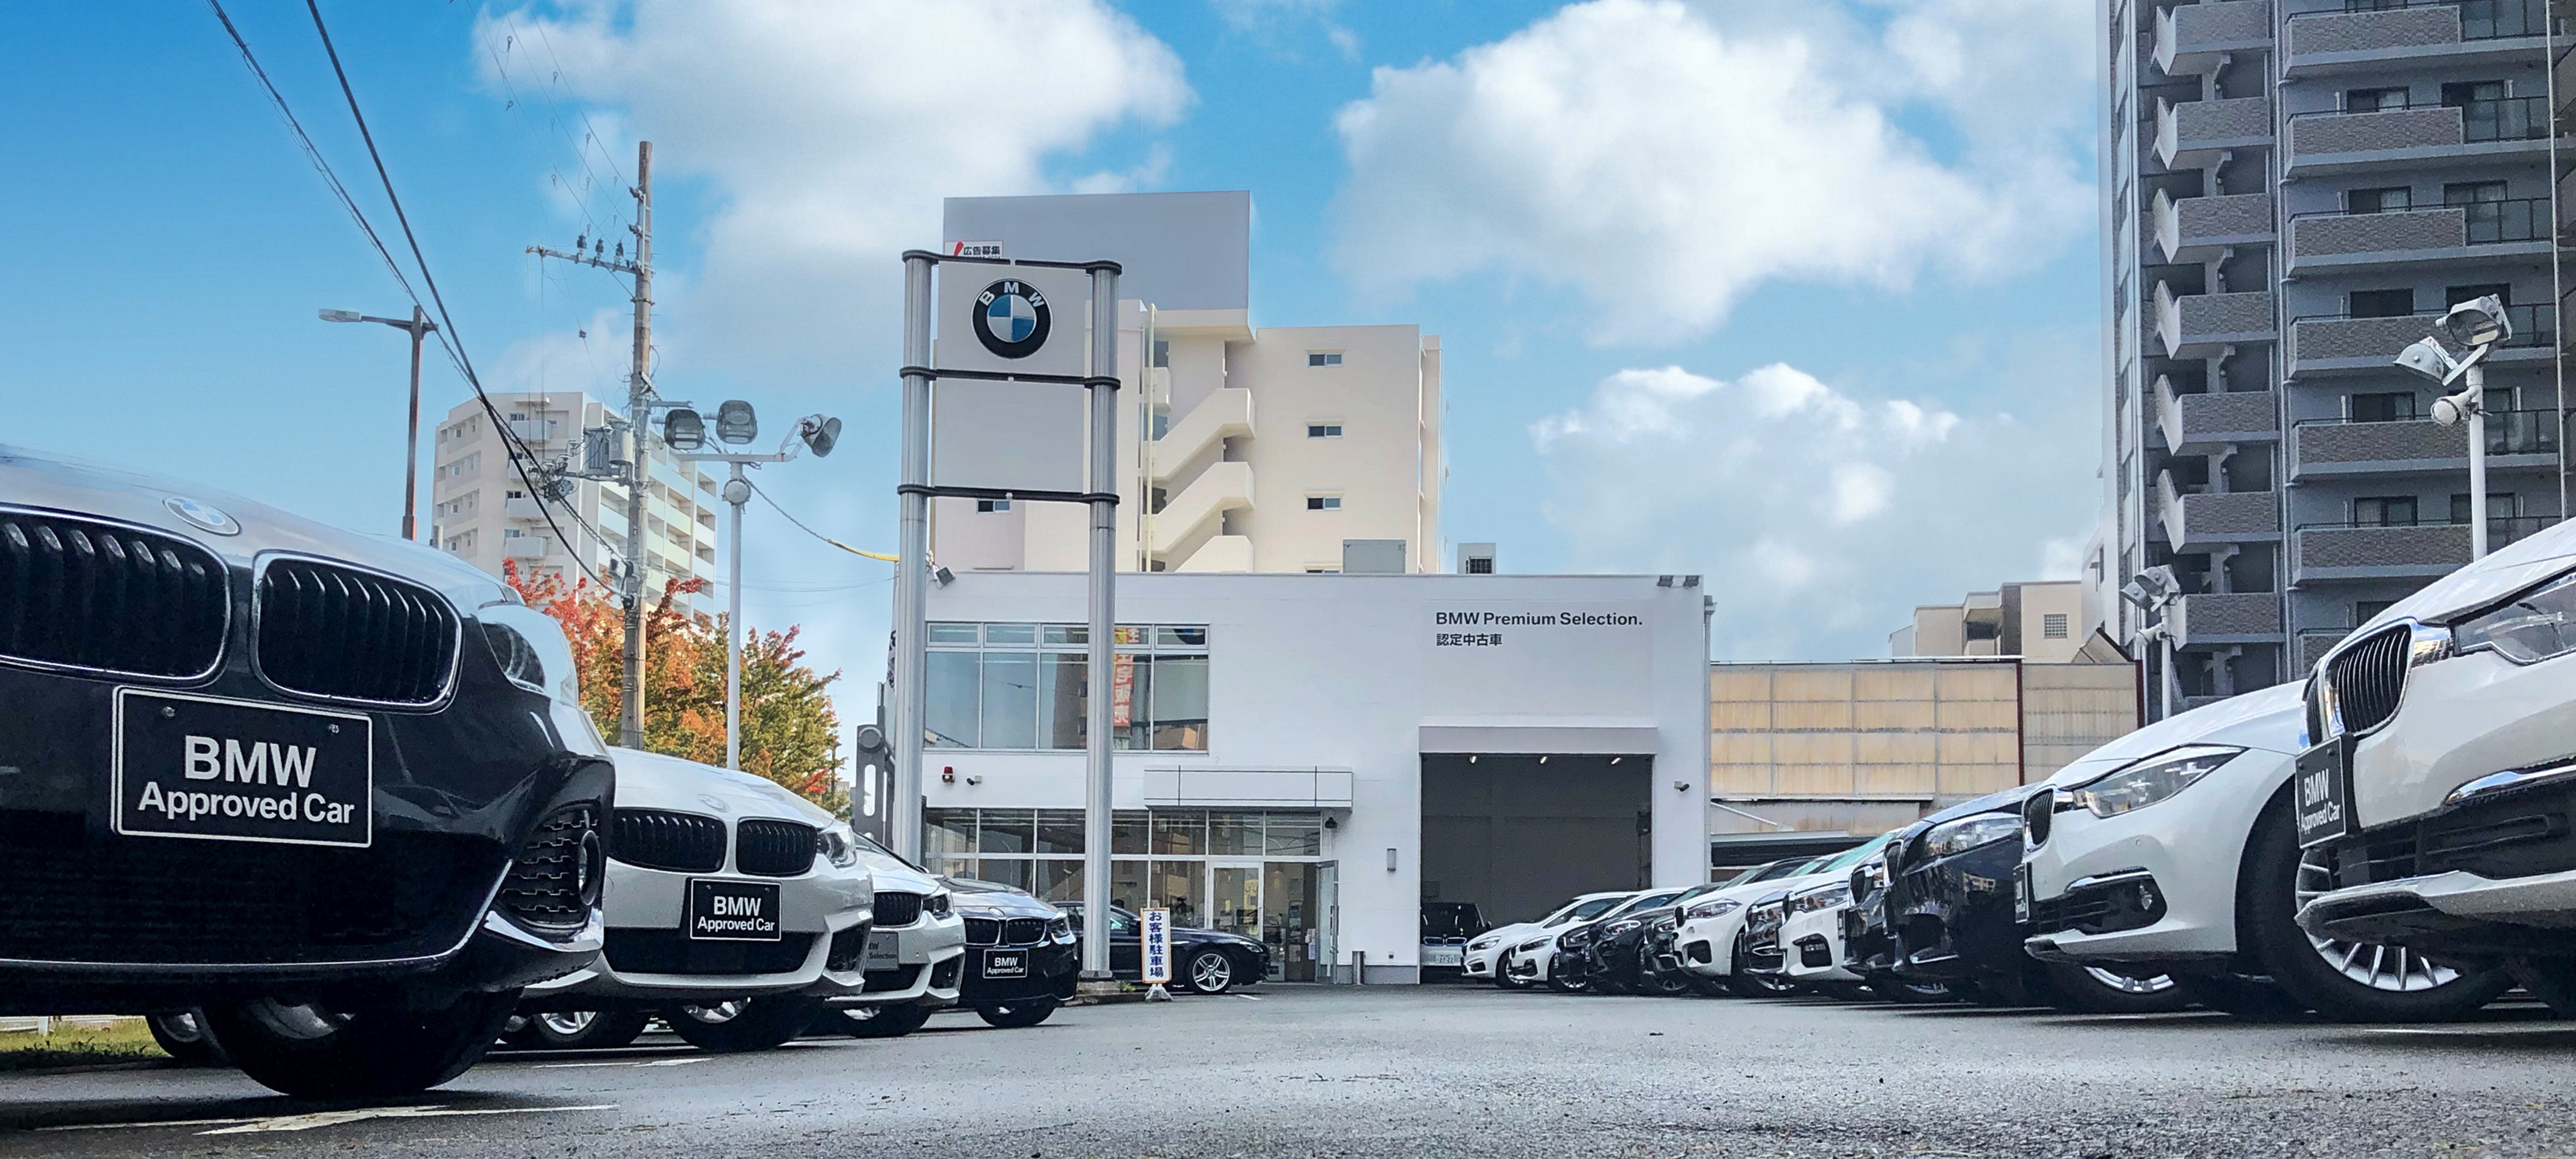 Osaka BMW Premium Selection 吹田